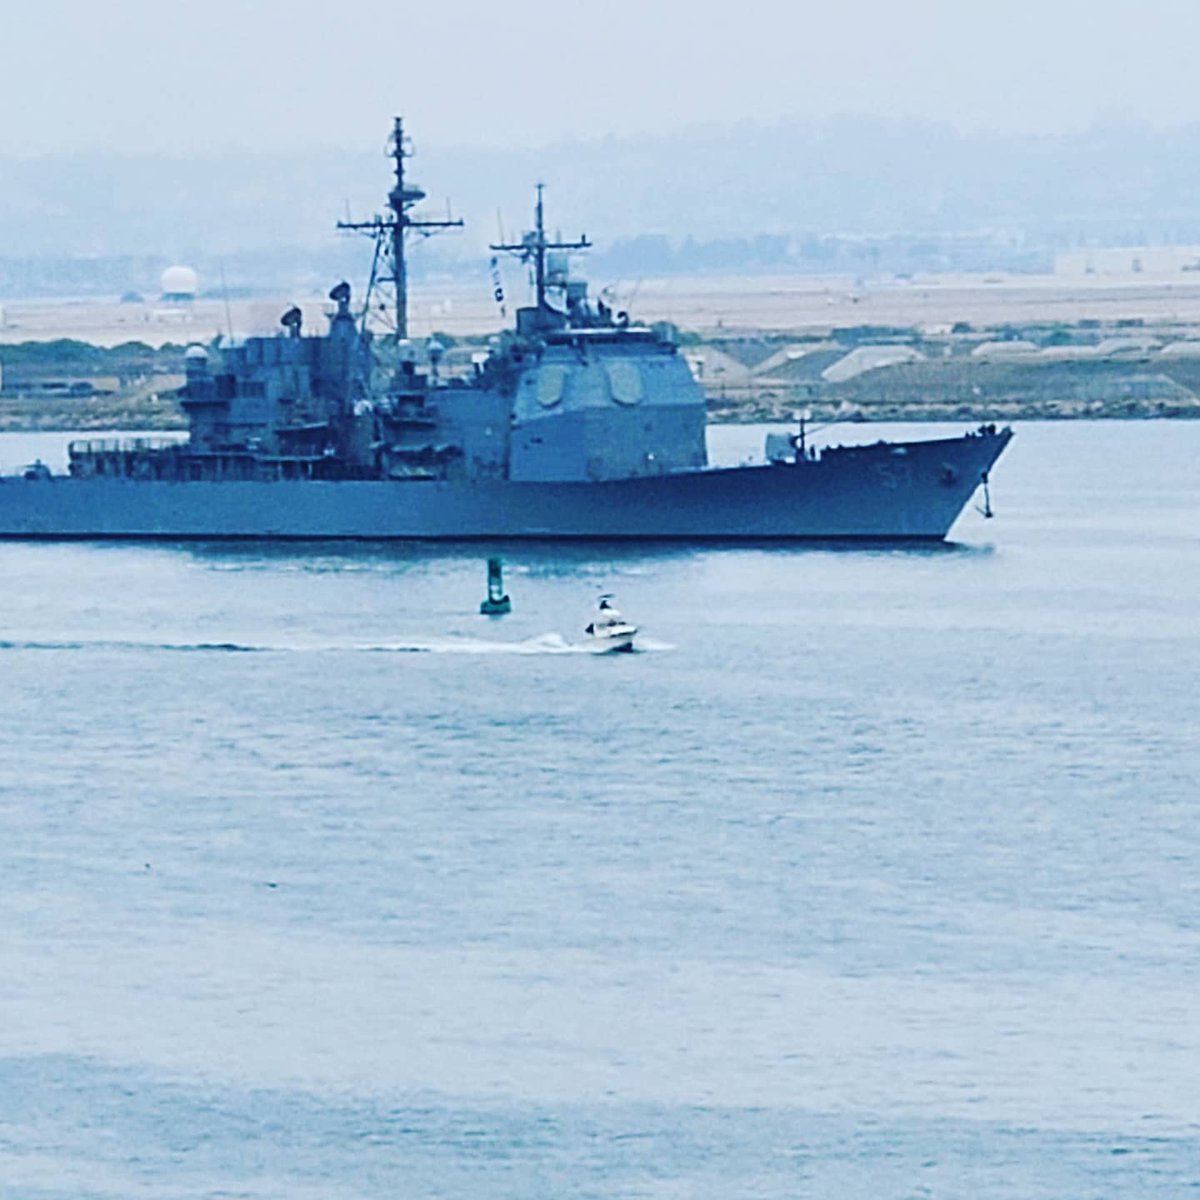 My favorite warship.
#usslakechamplain
#cg57 #pacificfleet
#3rdfleet